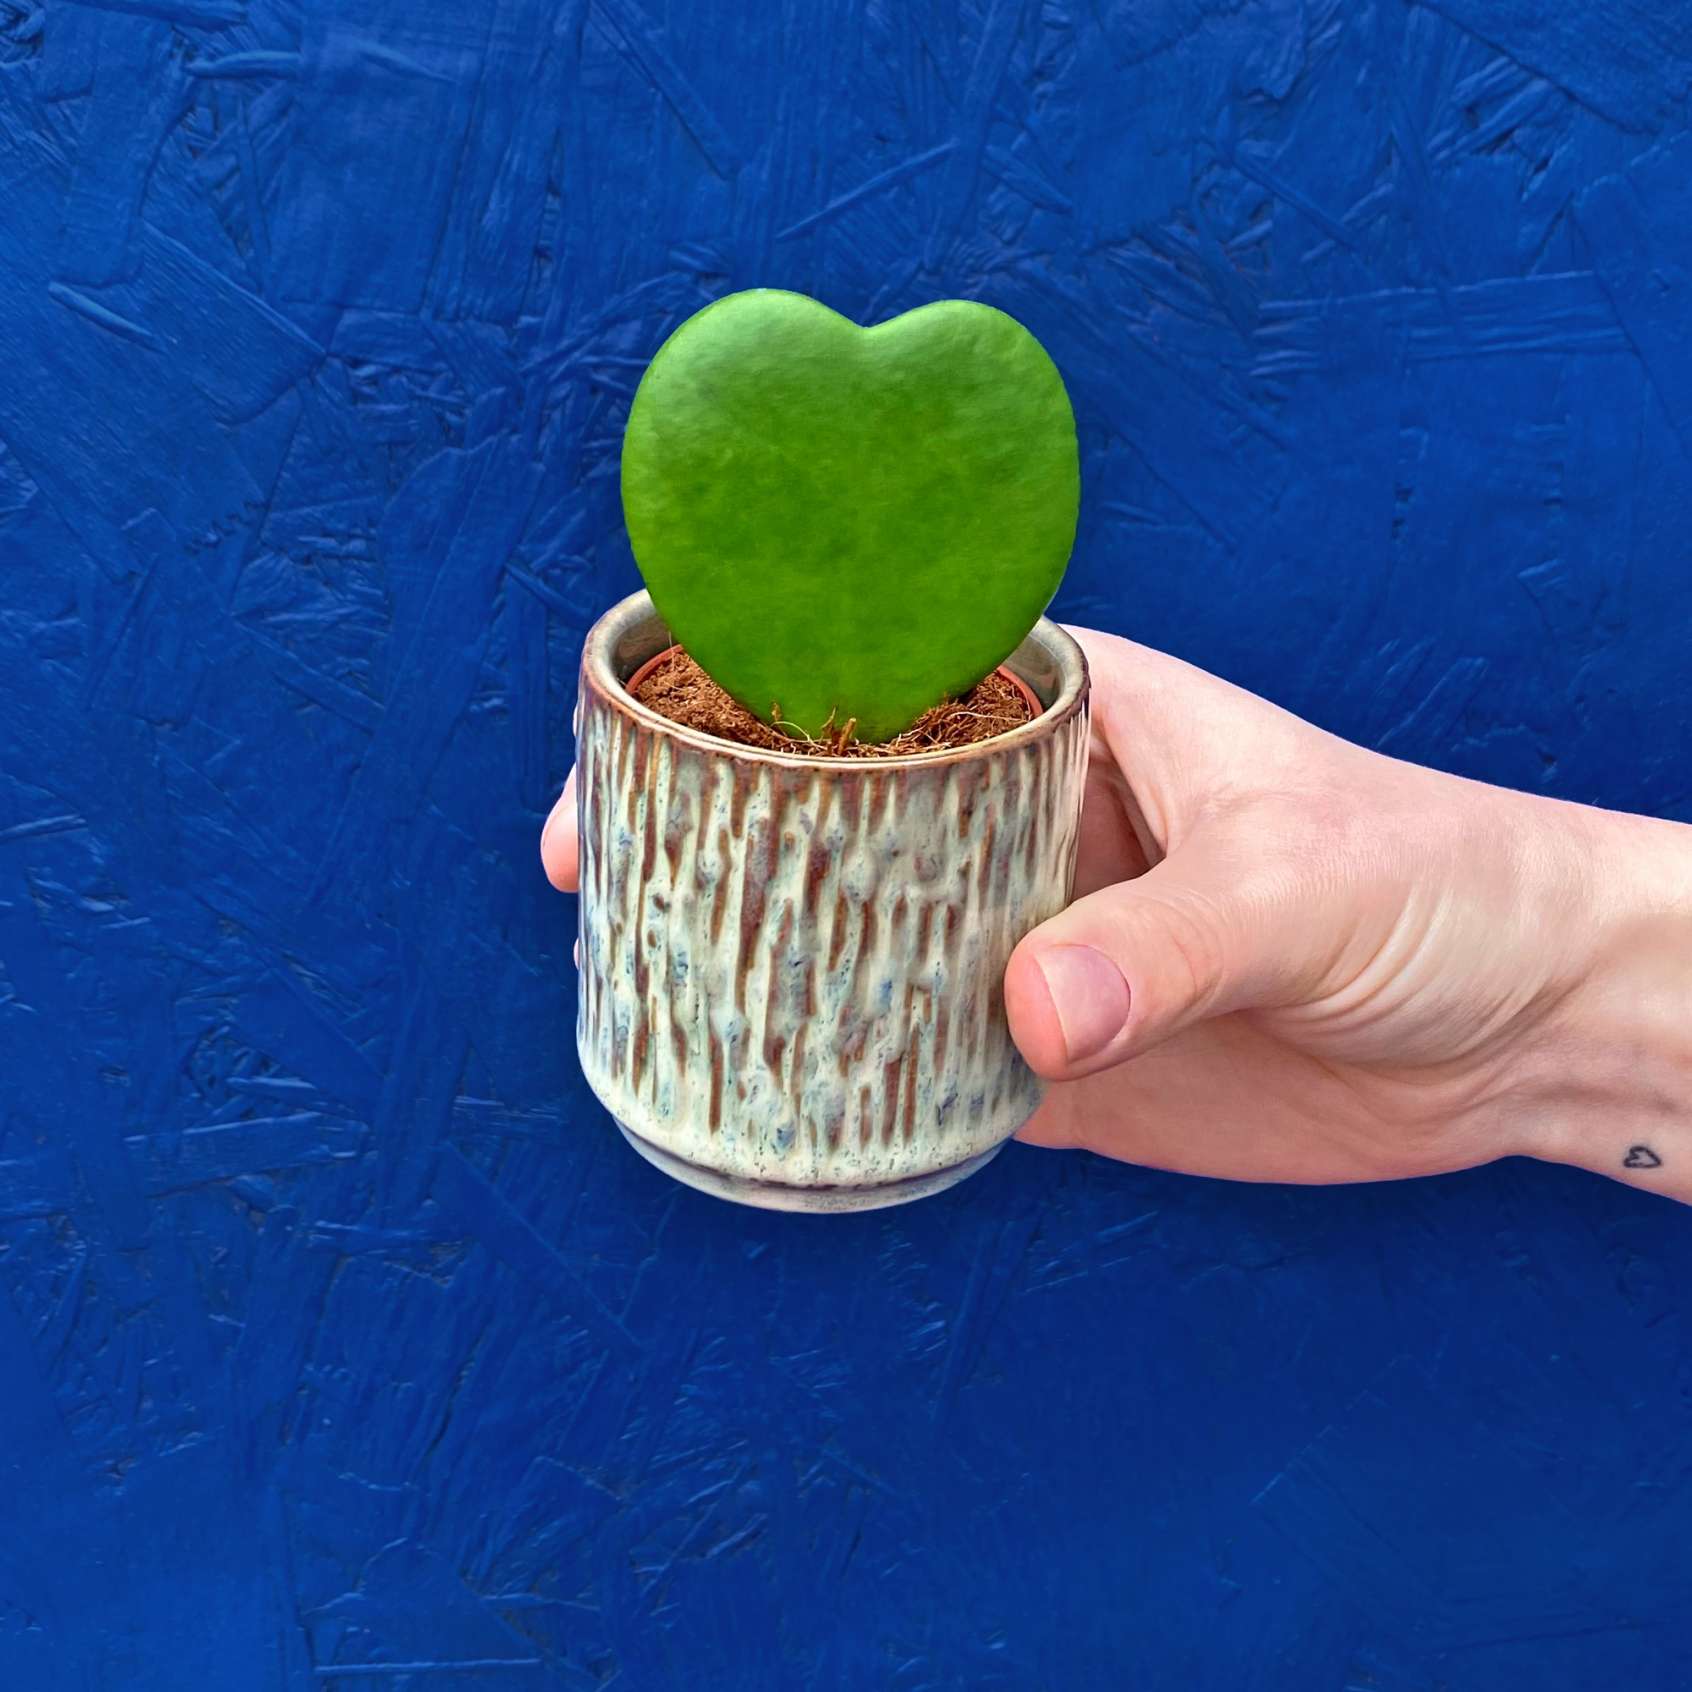 Hoya heart shaped plant